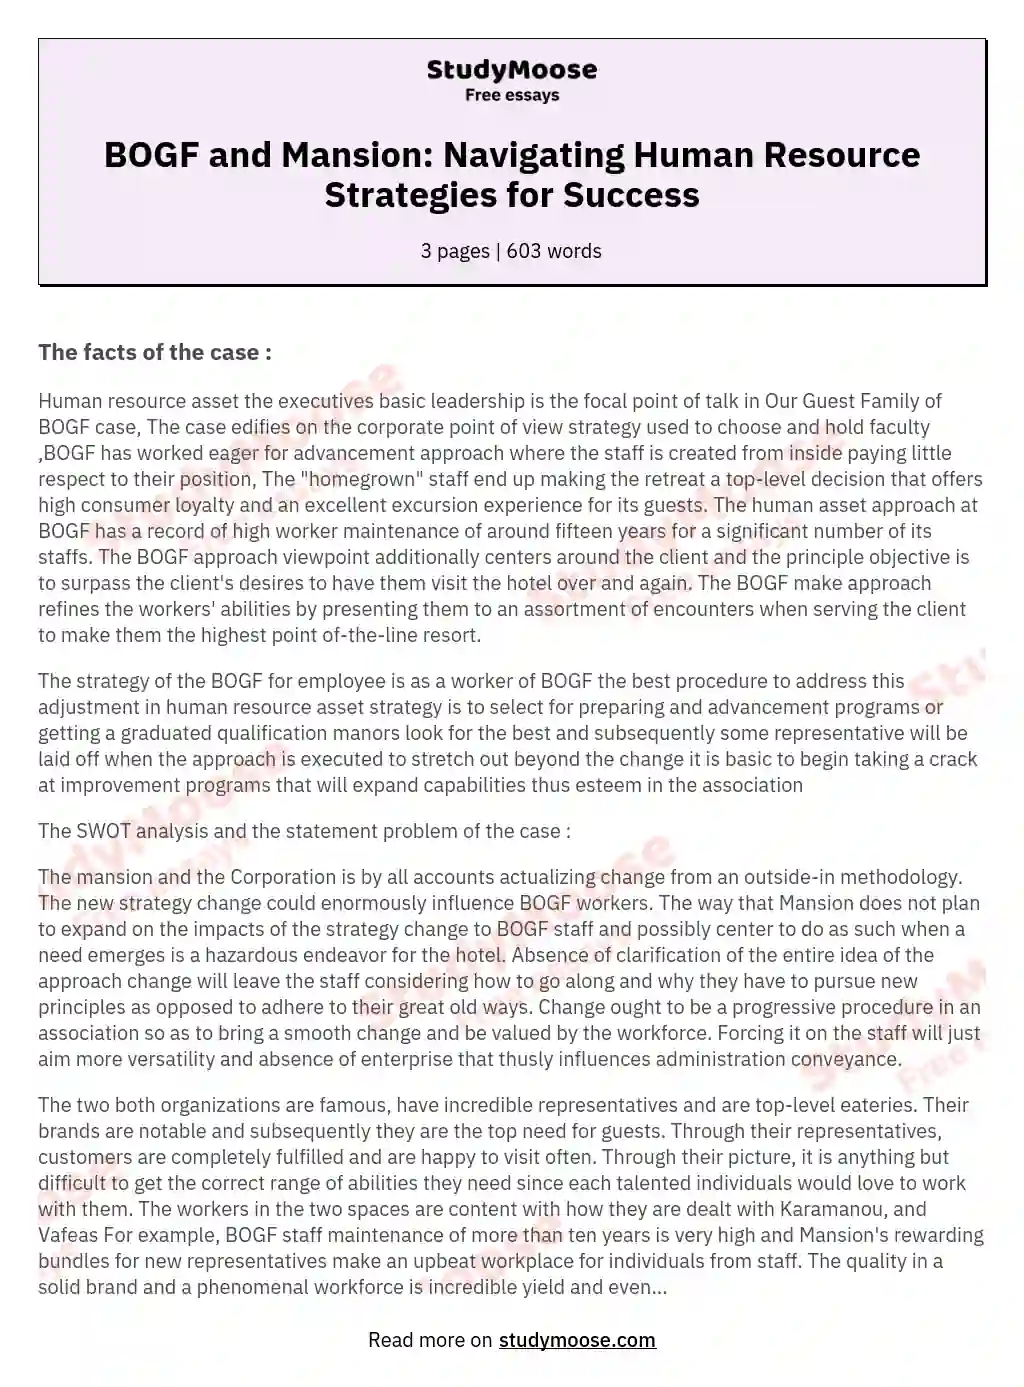 BOGF and Mansion: Navigating Human Resource Strategies for Success essay